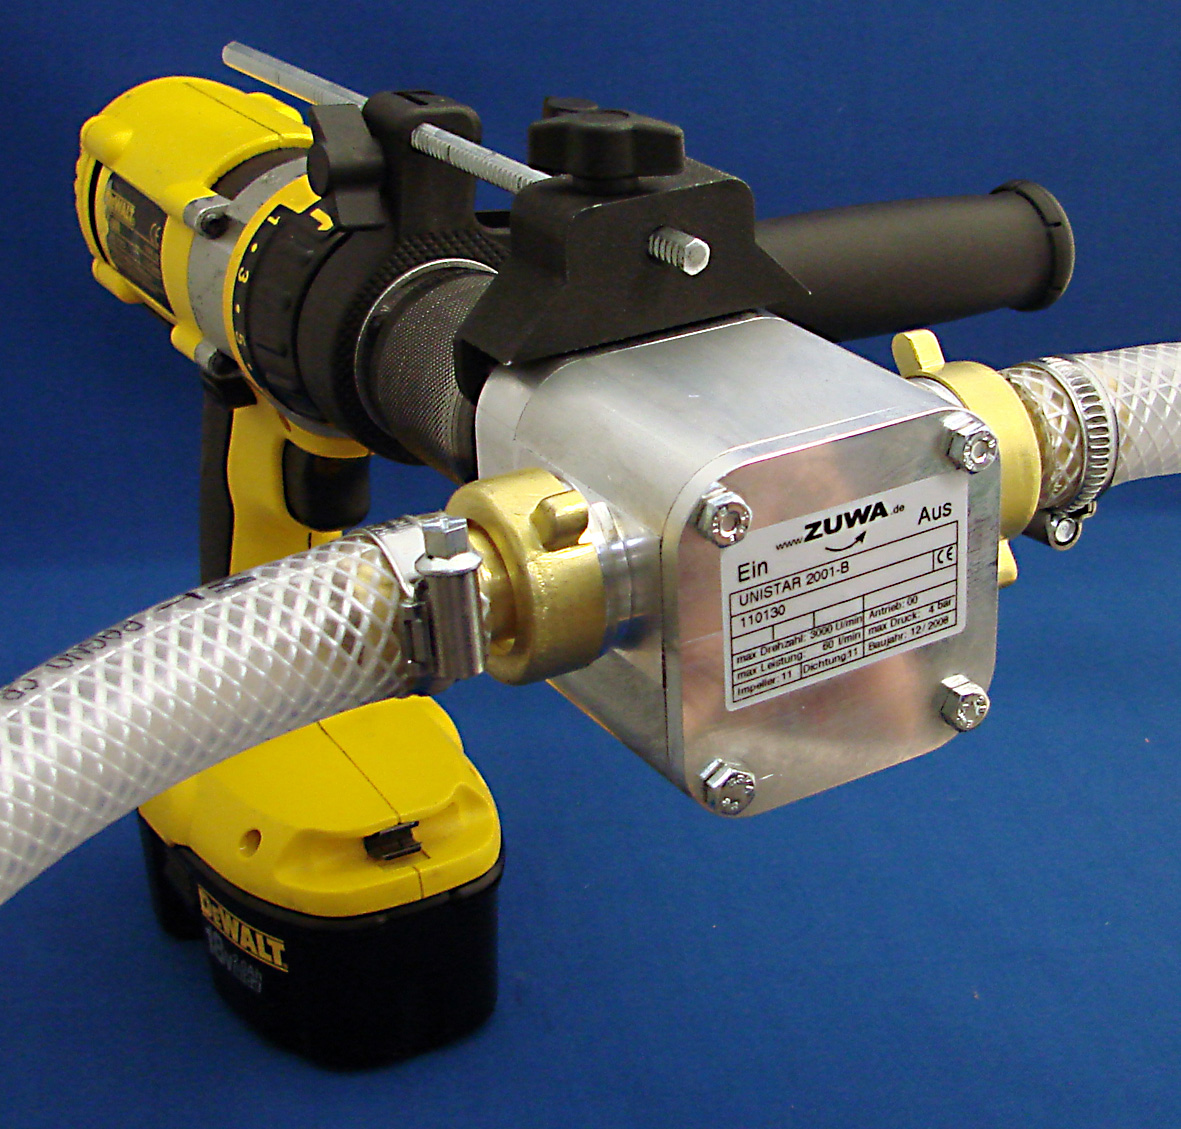 New Adaptor for ZUWA Drill Powered Pumps, ZUWA-Zumpe GmbH, Story - PresseBox